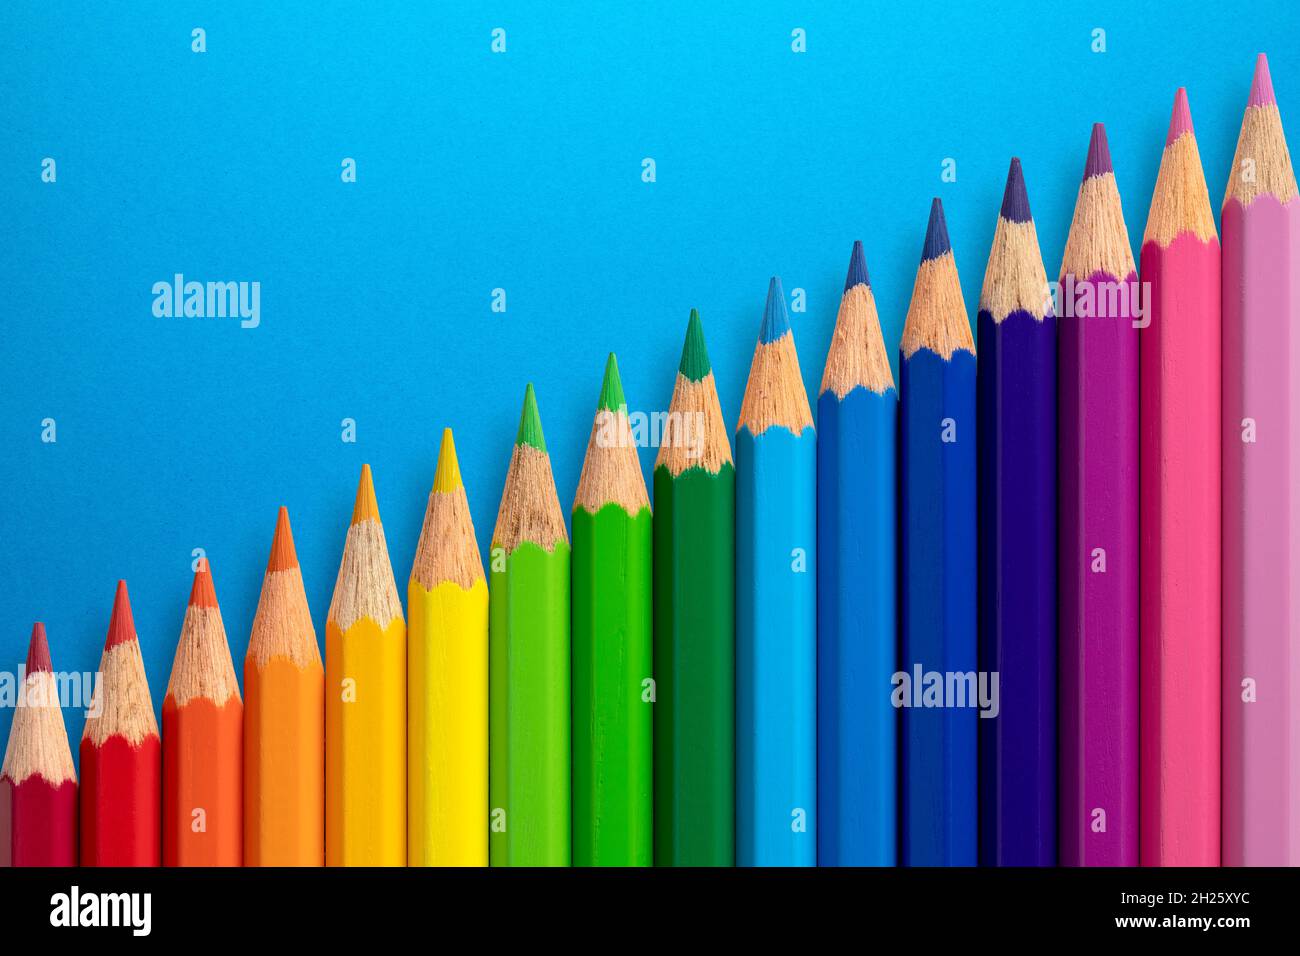 https://c8.alamy.com/comp/2H25XYC/colour-pencils-arranged-diagonally-on-a-blue-paper-background-2H25XYC.jpg